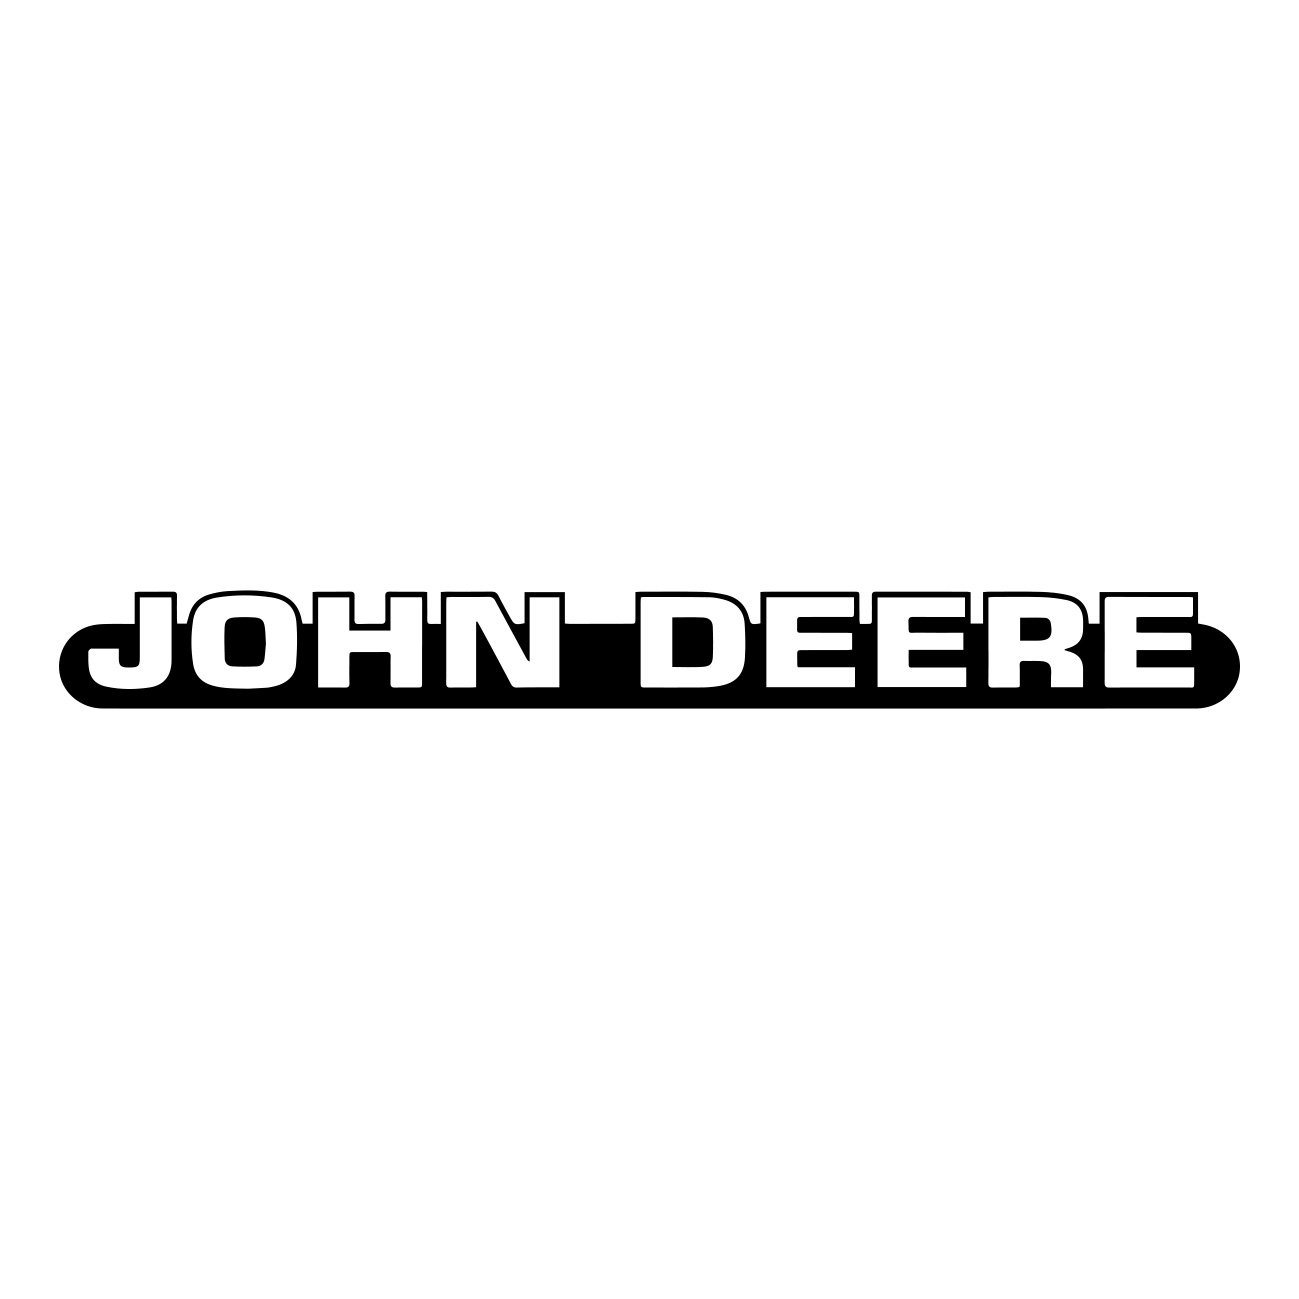 john deer logo2